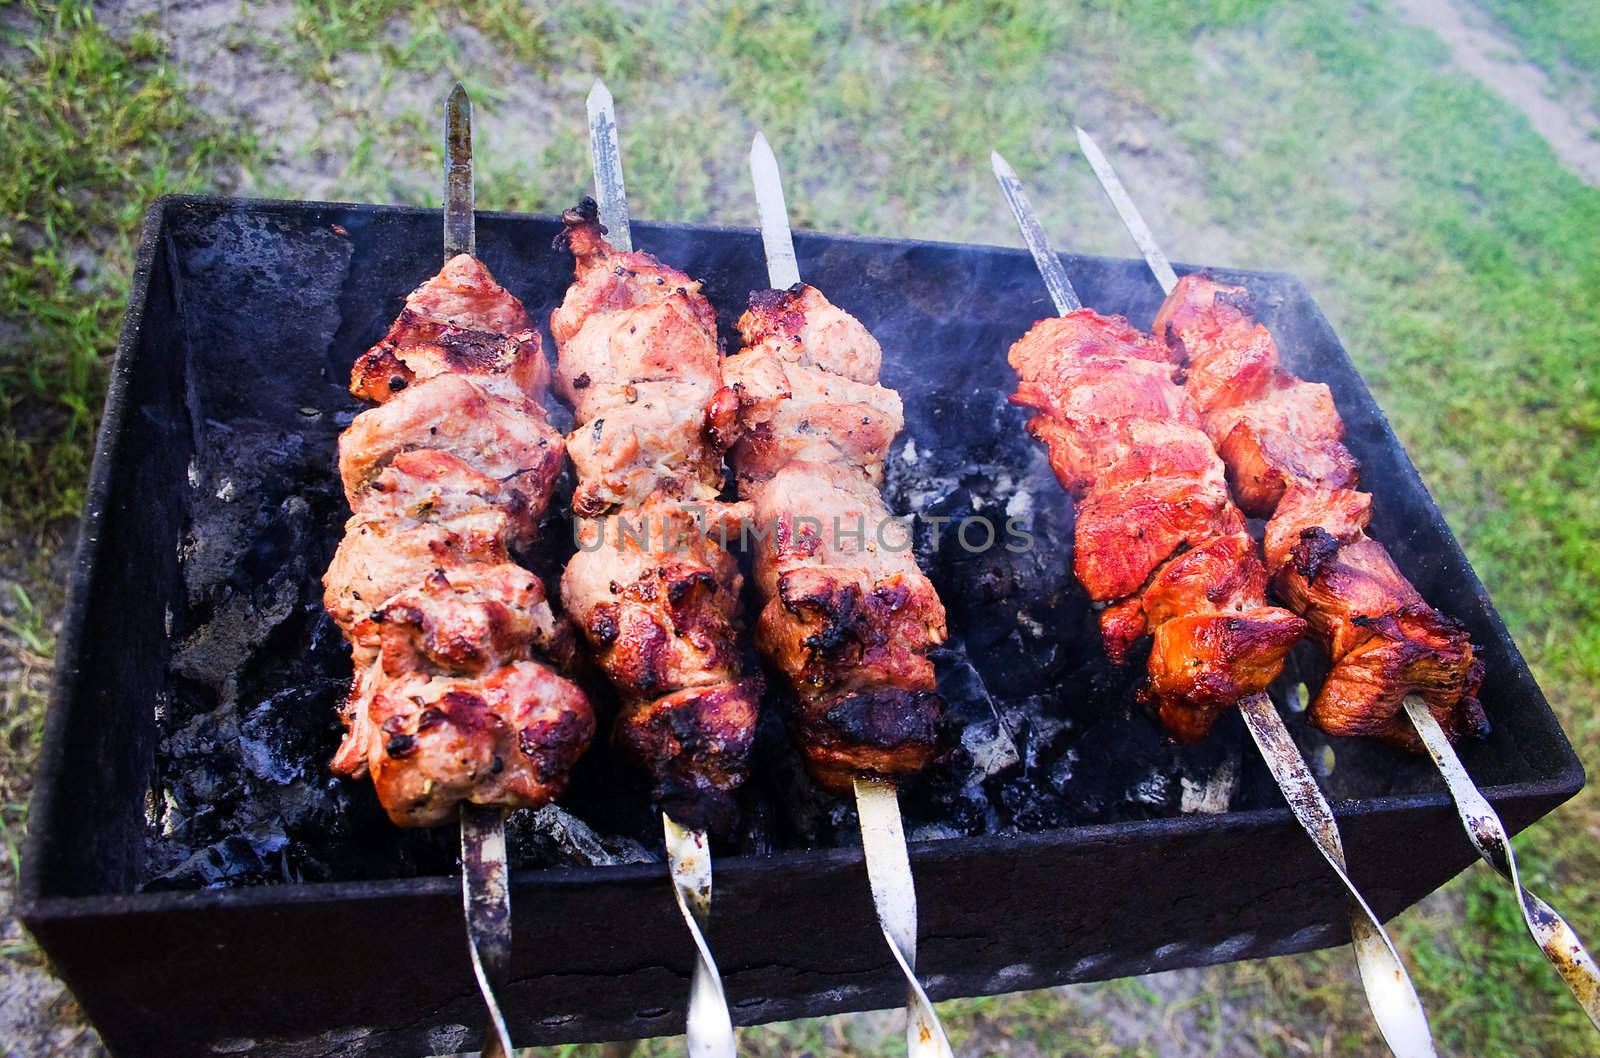 Grilled meat prepeared in marinade is Shish Kabob, kebob or kebap.